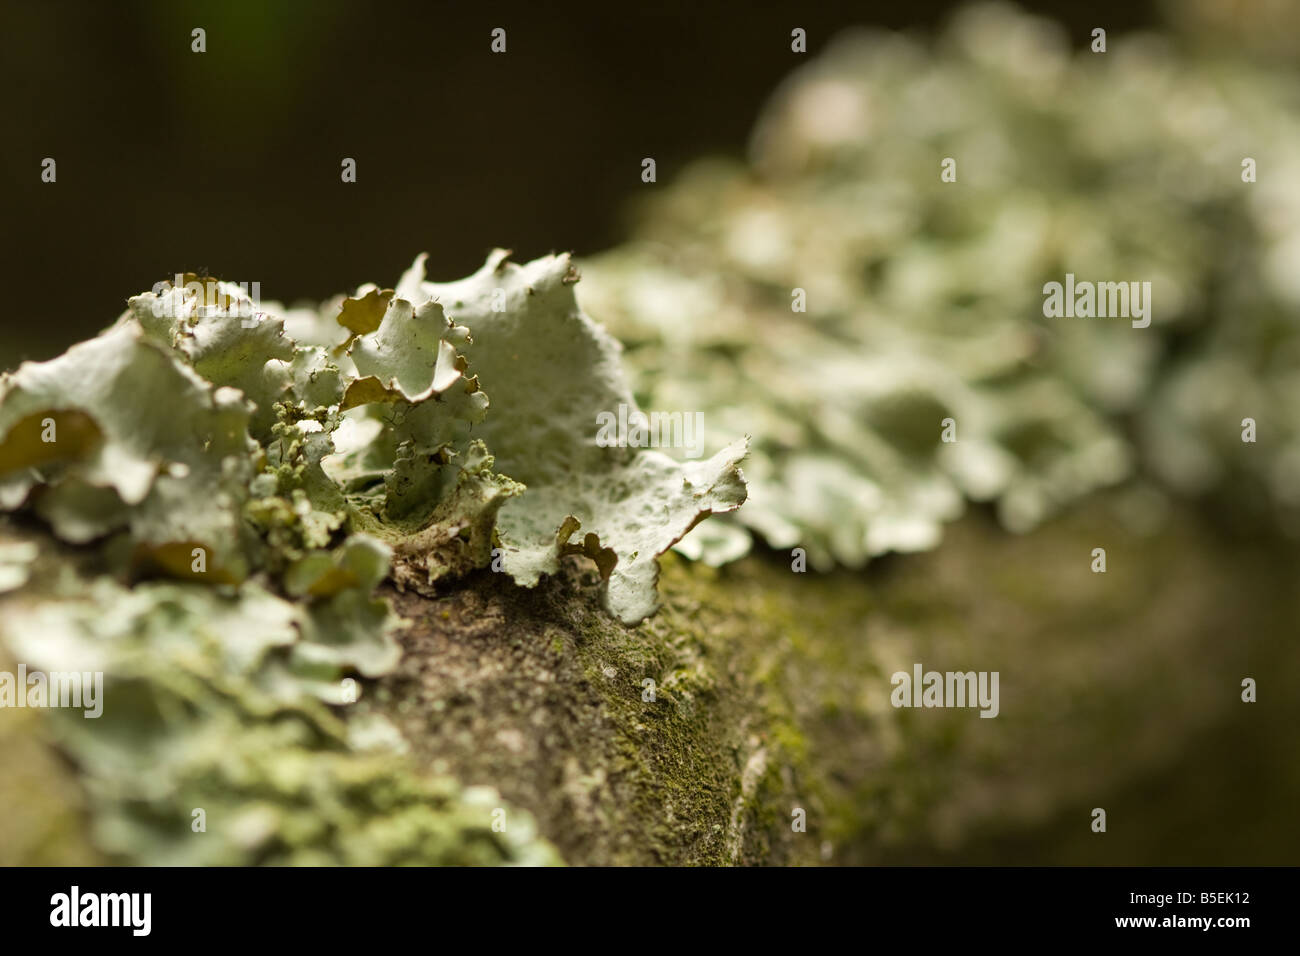 Macro shot of Common Green Shield Lichen (Flavoparmelia caperata) growing on a tree branch Stock Photo